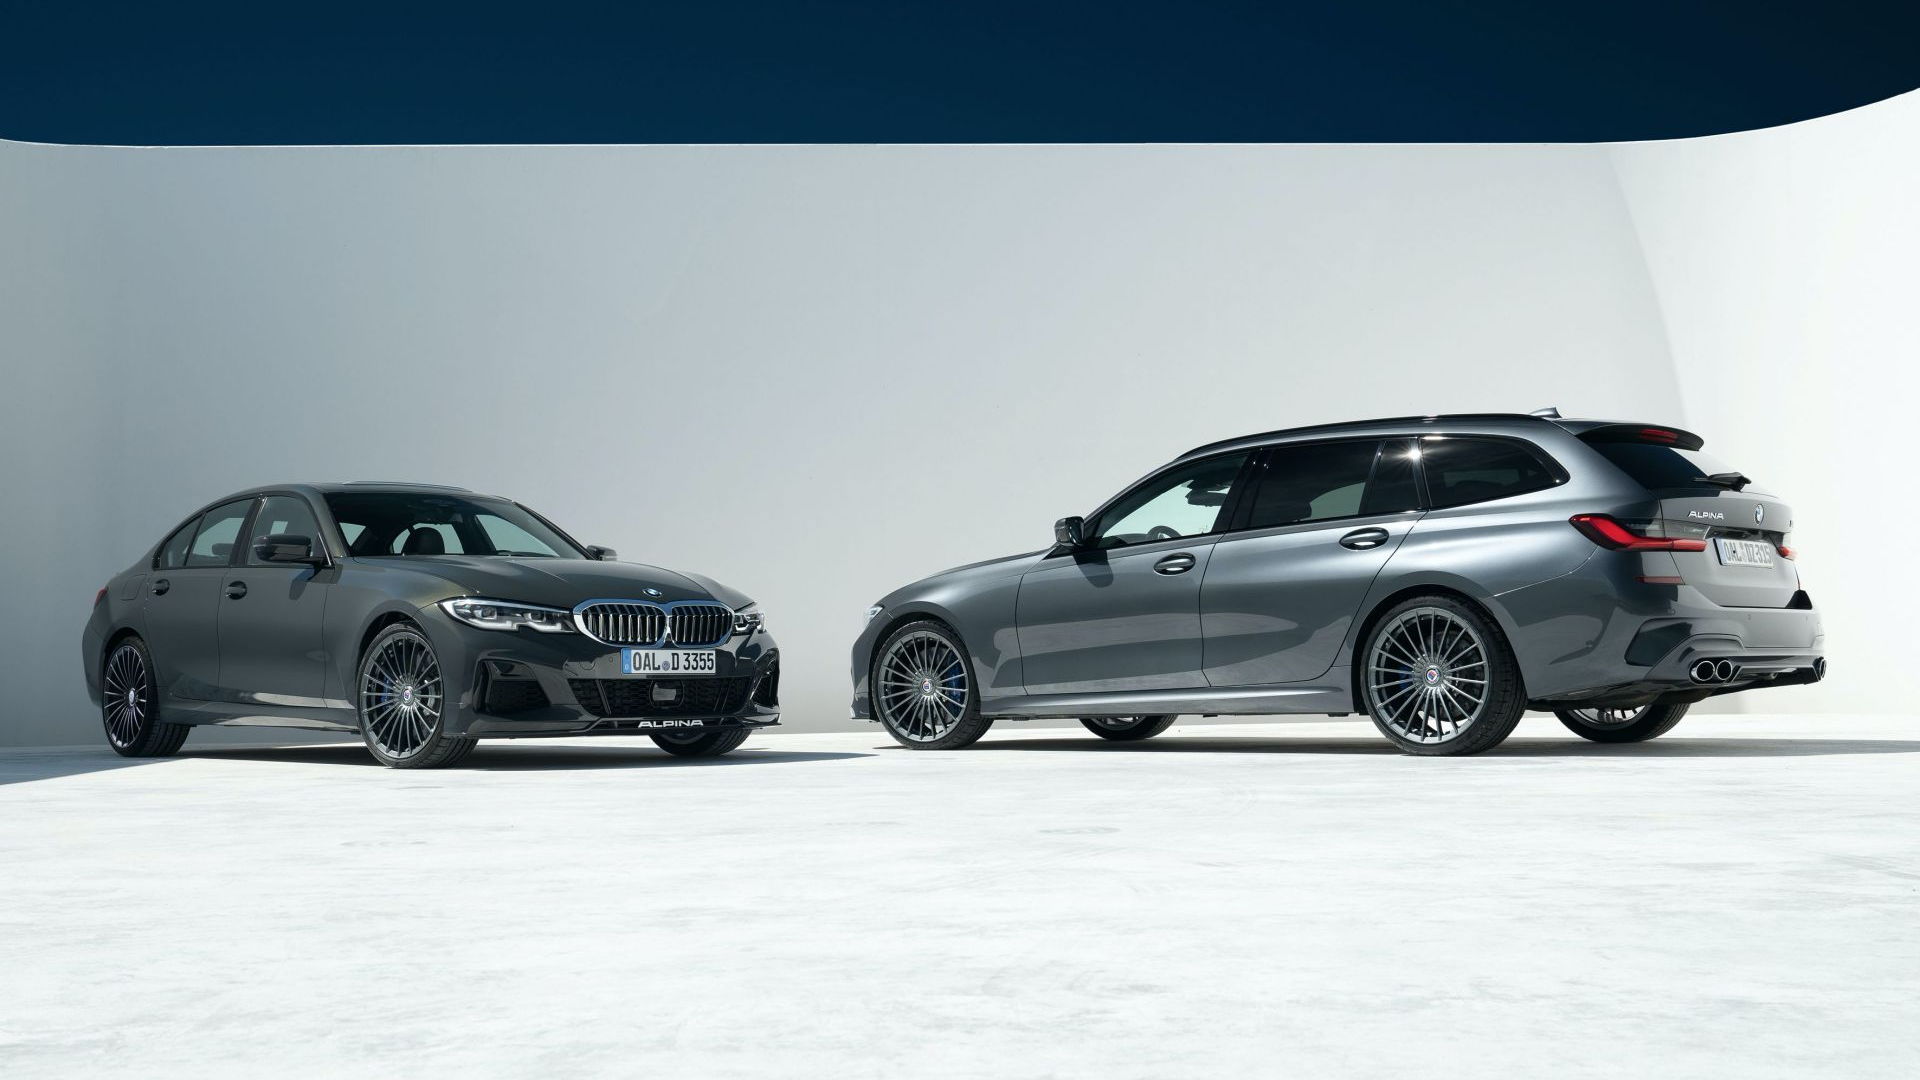 2020 BMW Alpina D3 S and D3 S Touring